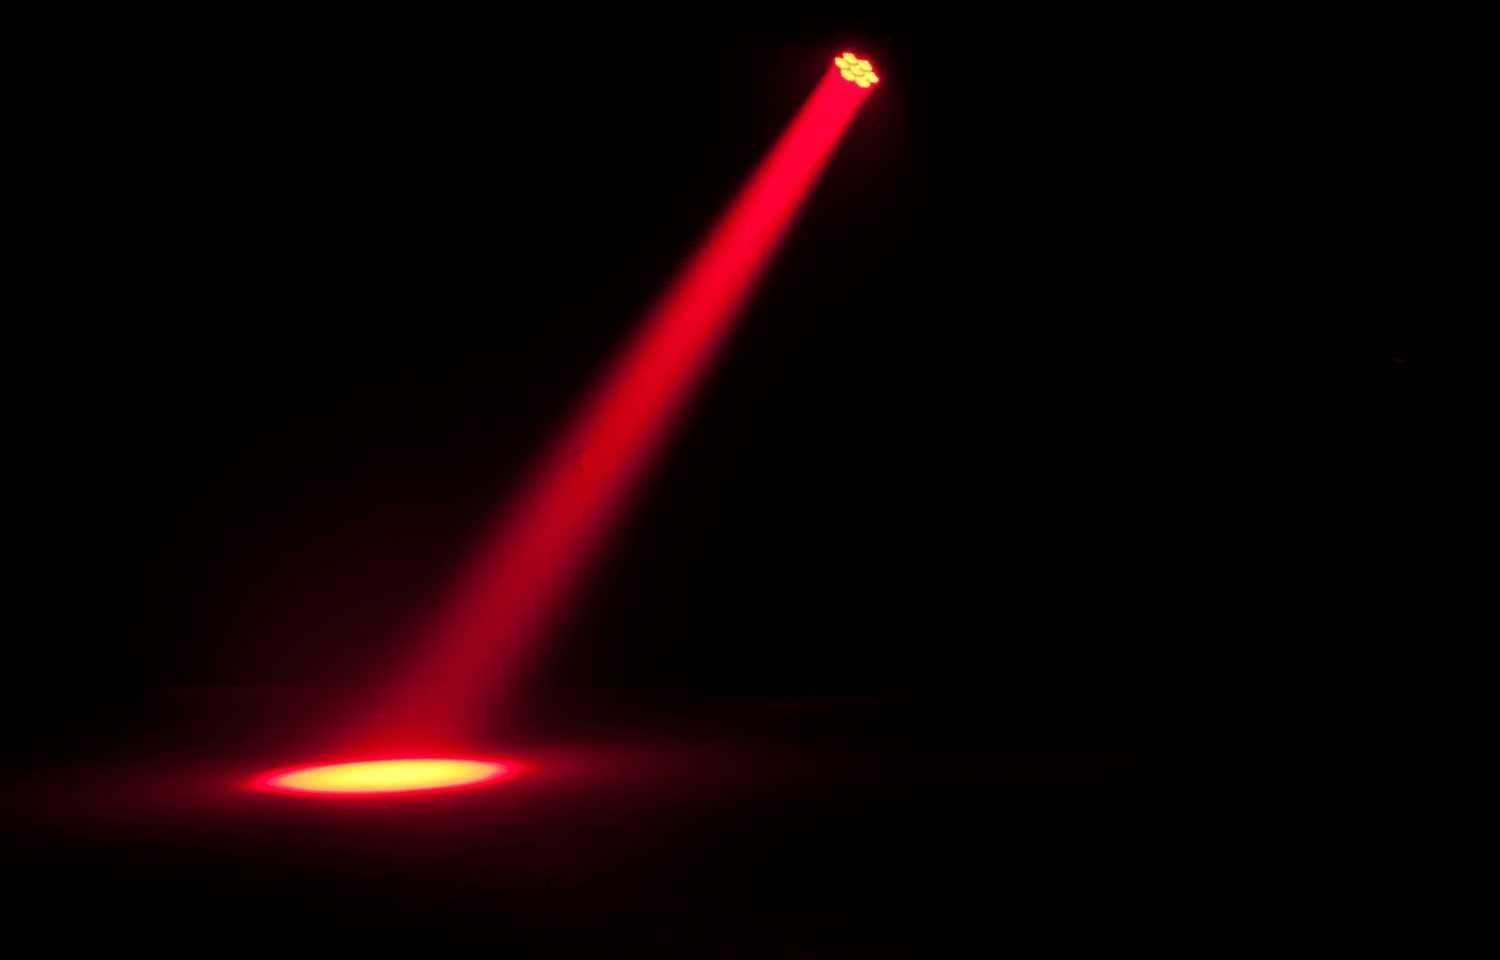 ADJ American DJ Vizi Hex Wash 7 LED 7x15-Watt Hex Moving Head Light - PSSL ProSound and Stage Lighting